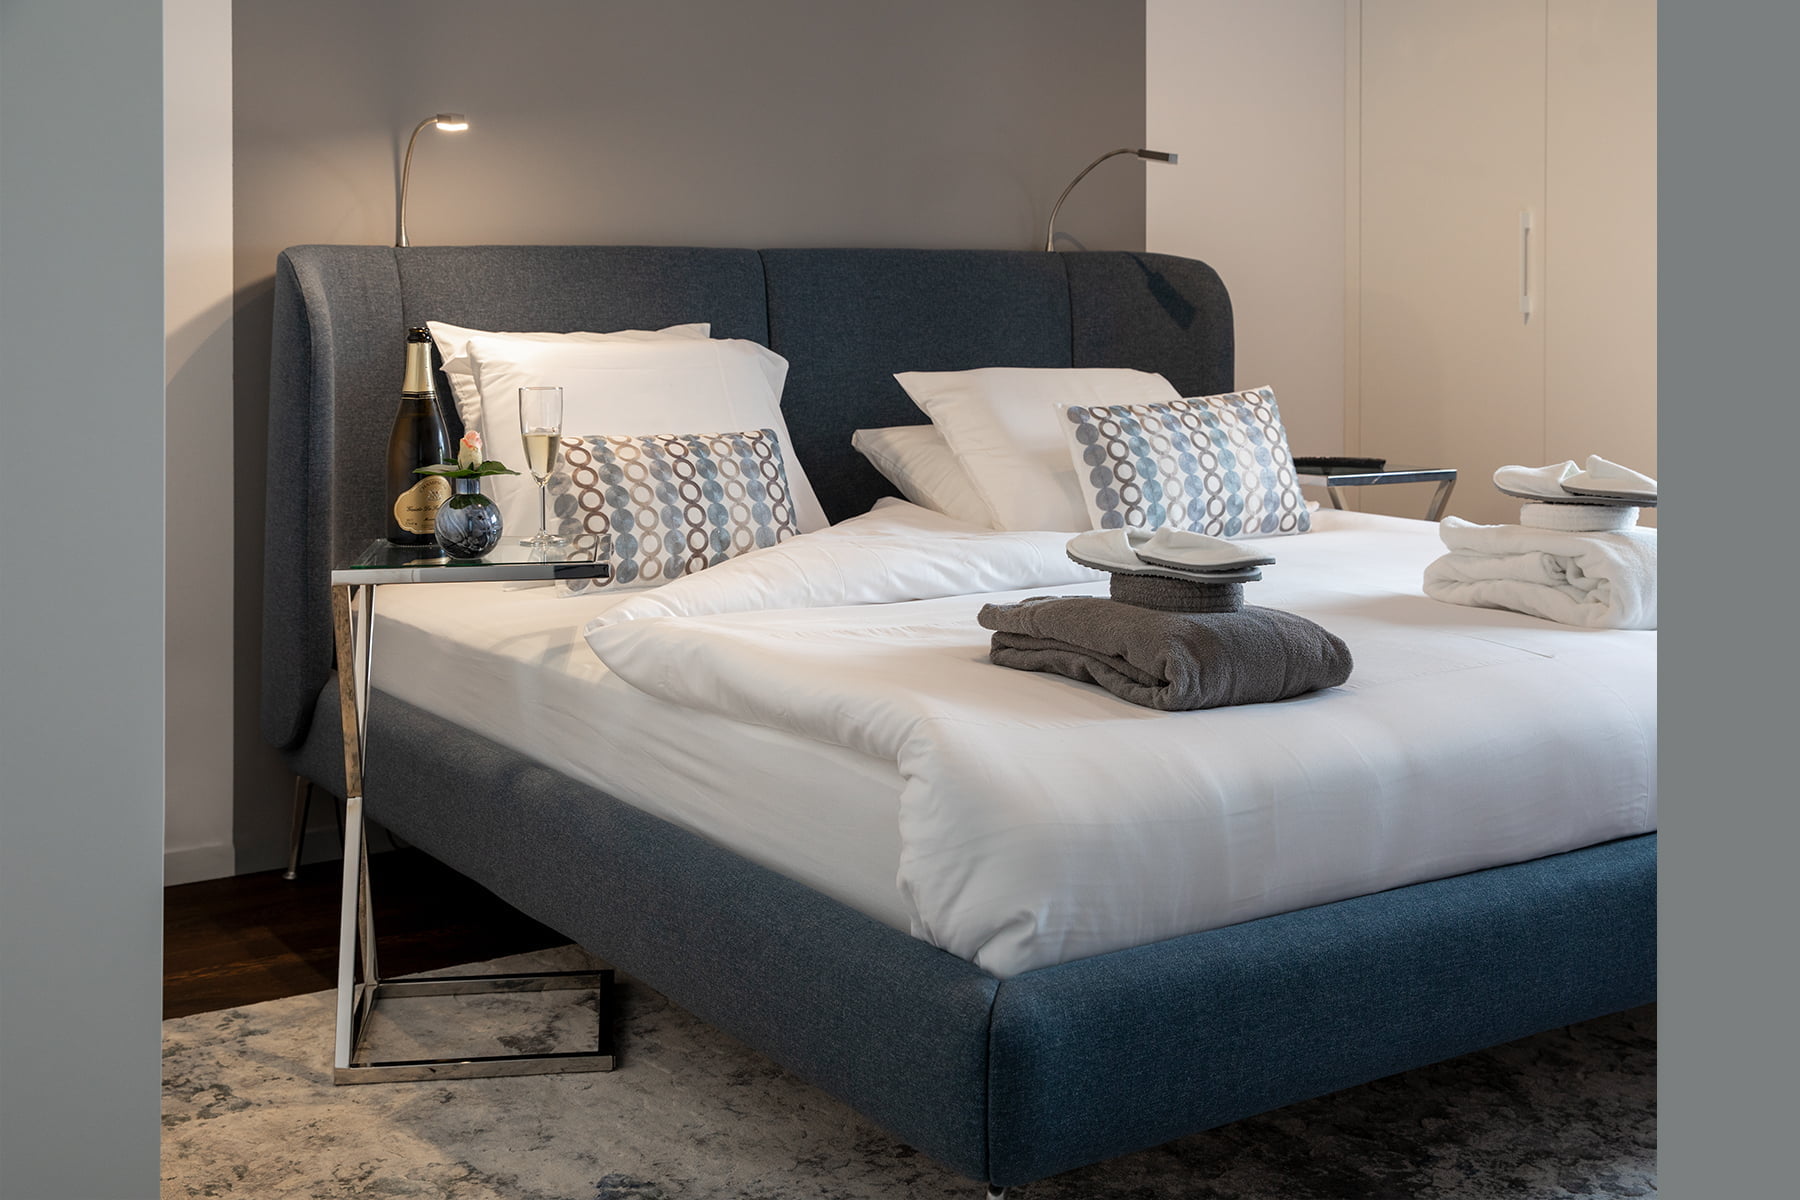 Antwerp luxury apartment for professionals